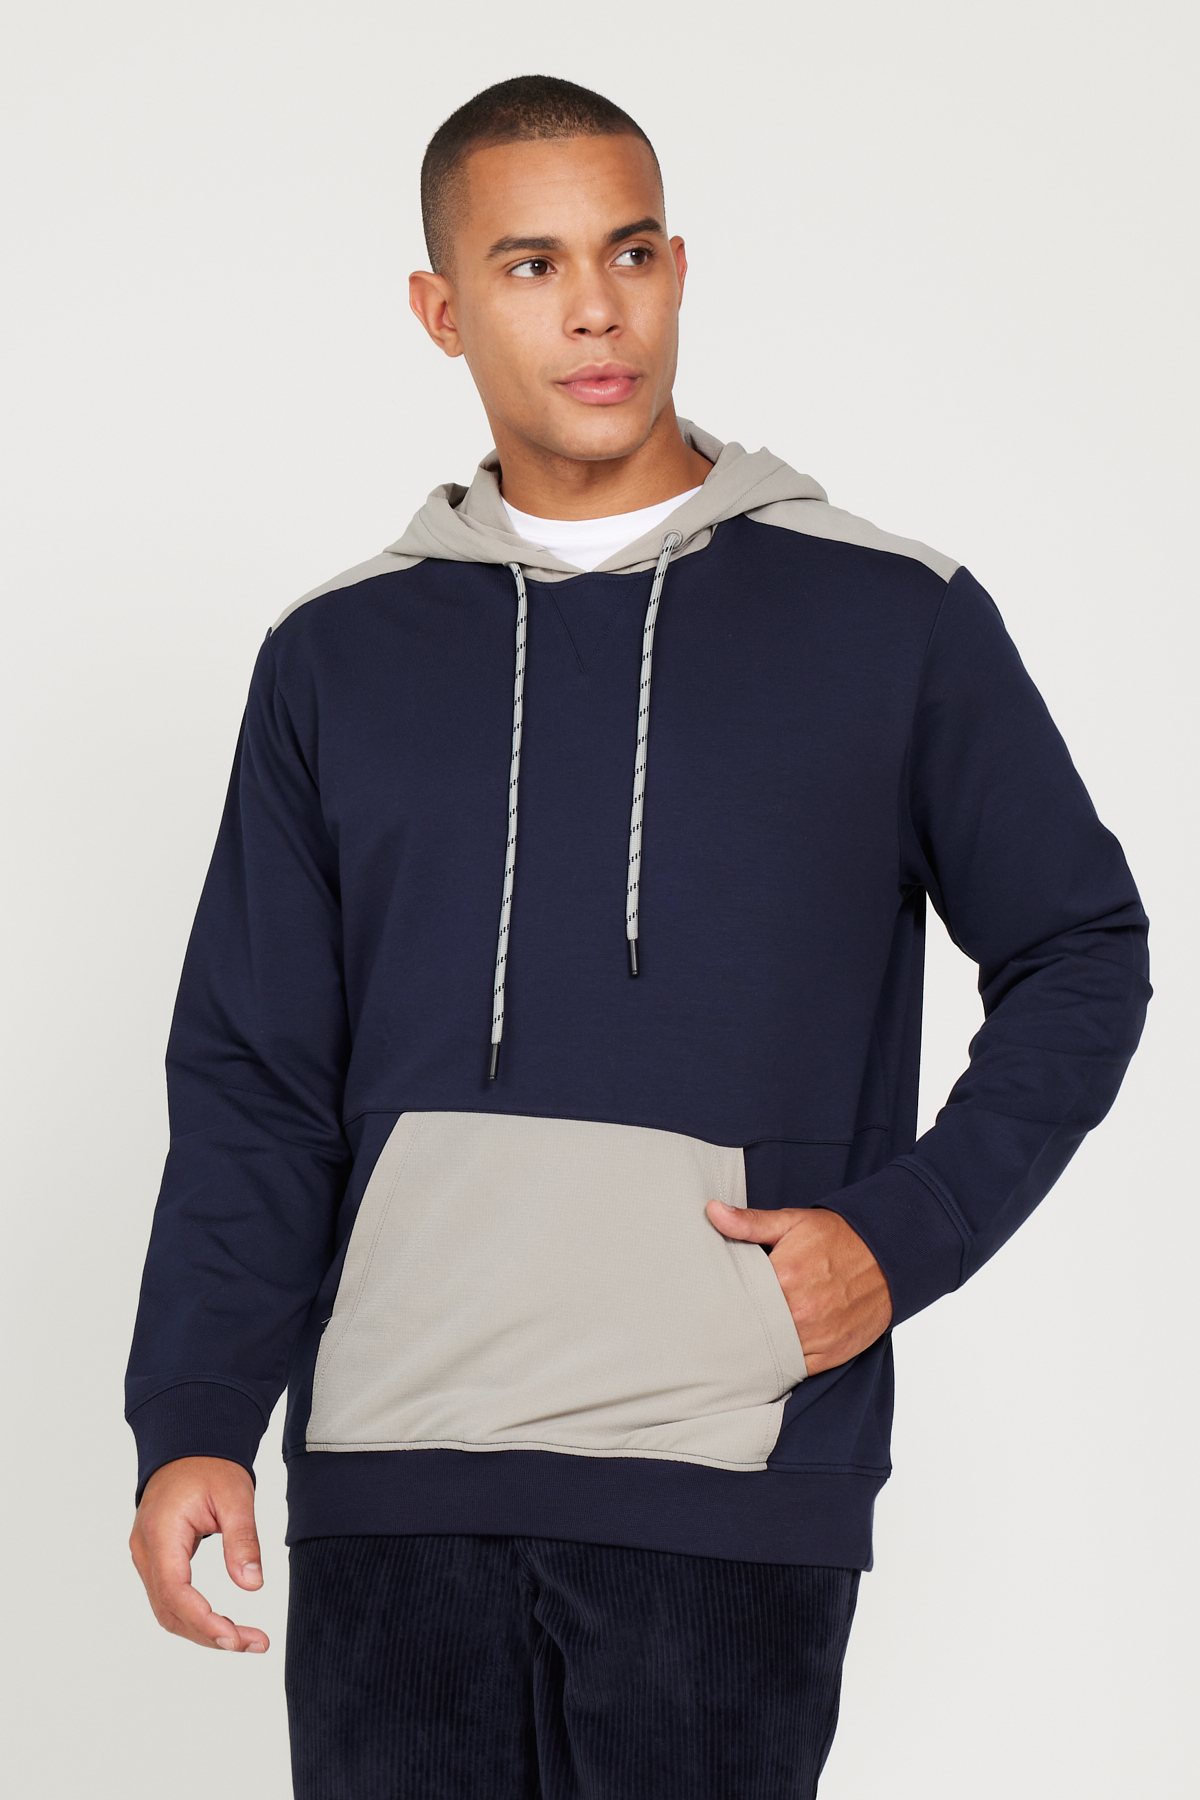 ALTINYILDIZ CLASSICS Men's Navy Blue Standard Fit Regular Cut Hoodie with Pockets Sweatshirt.